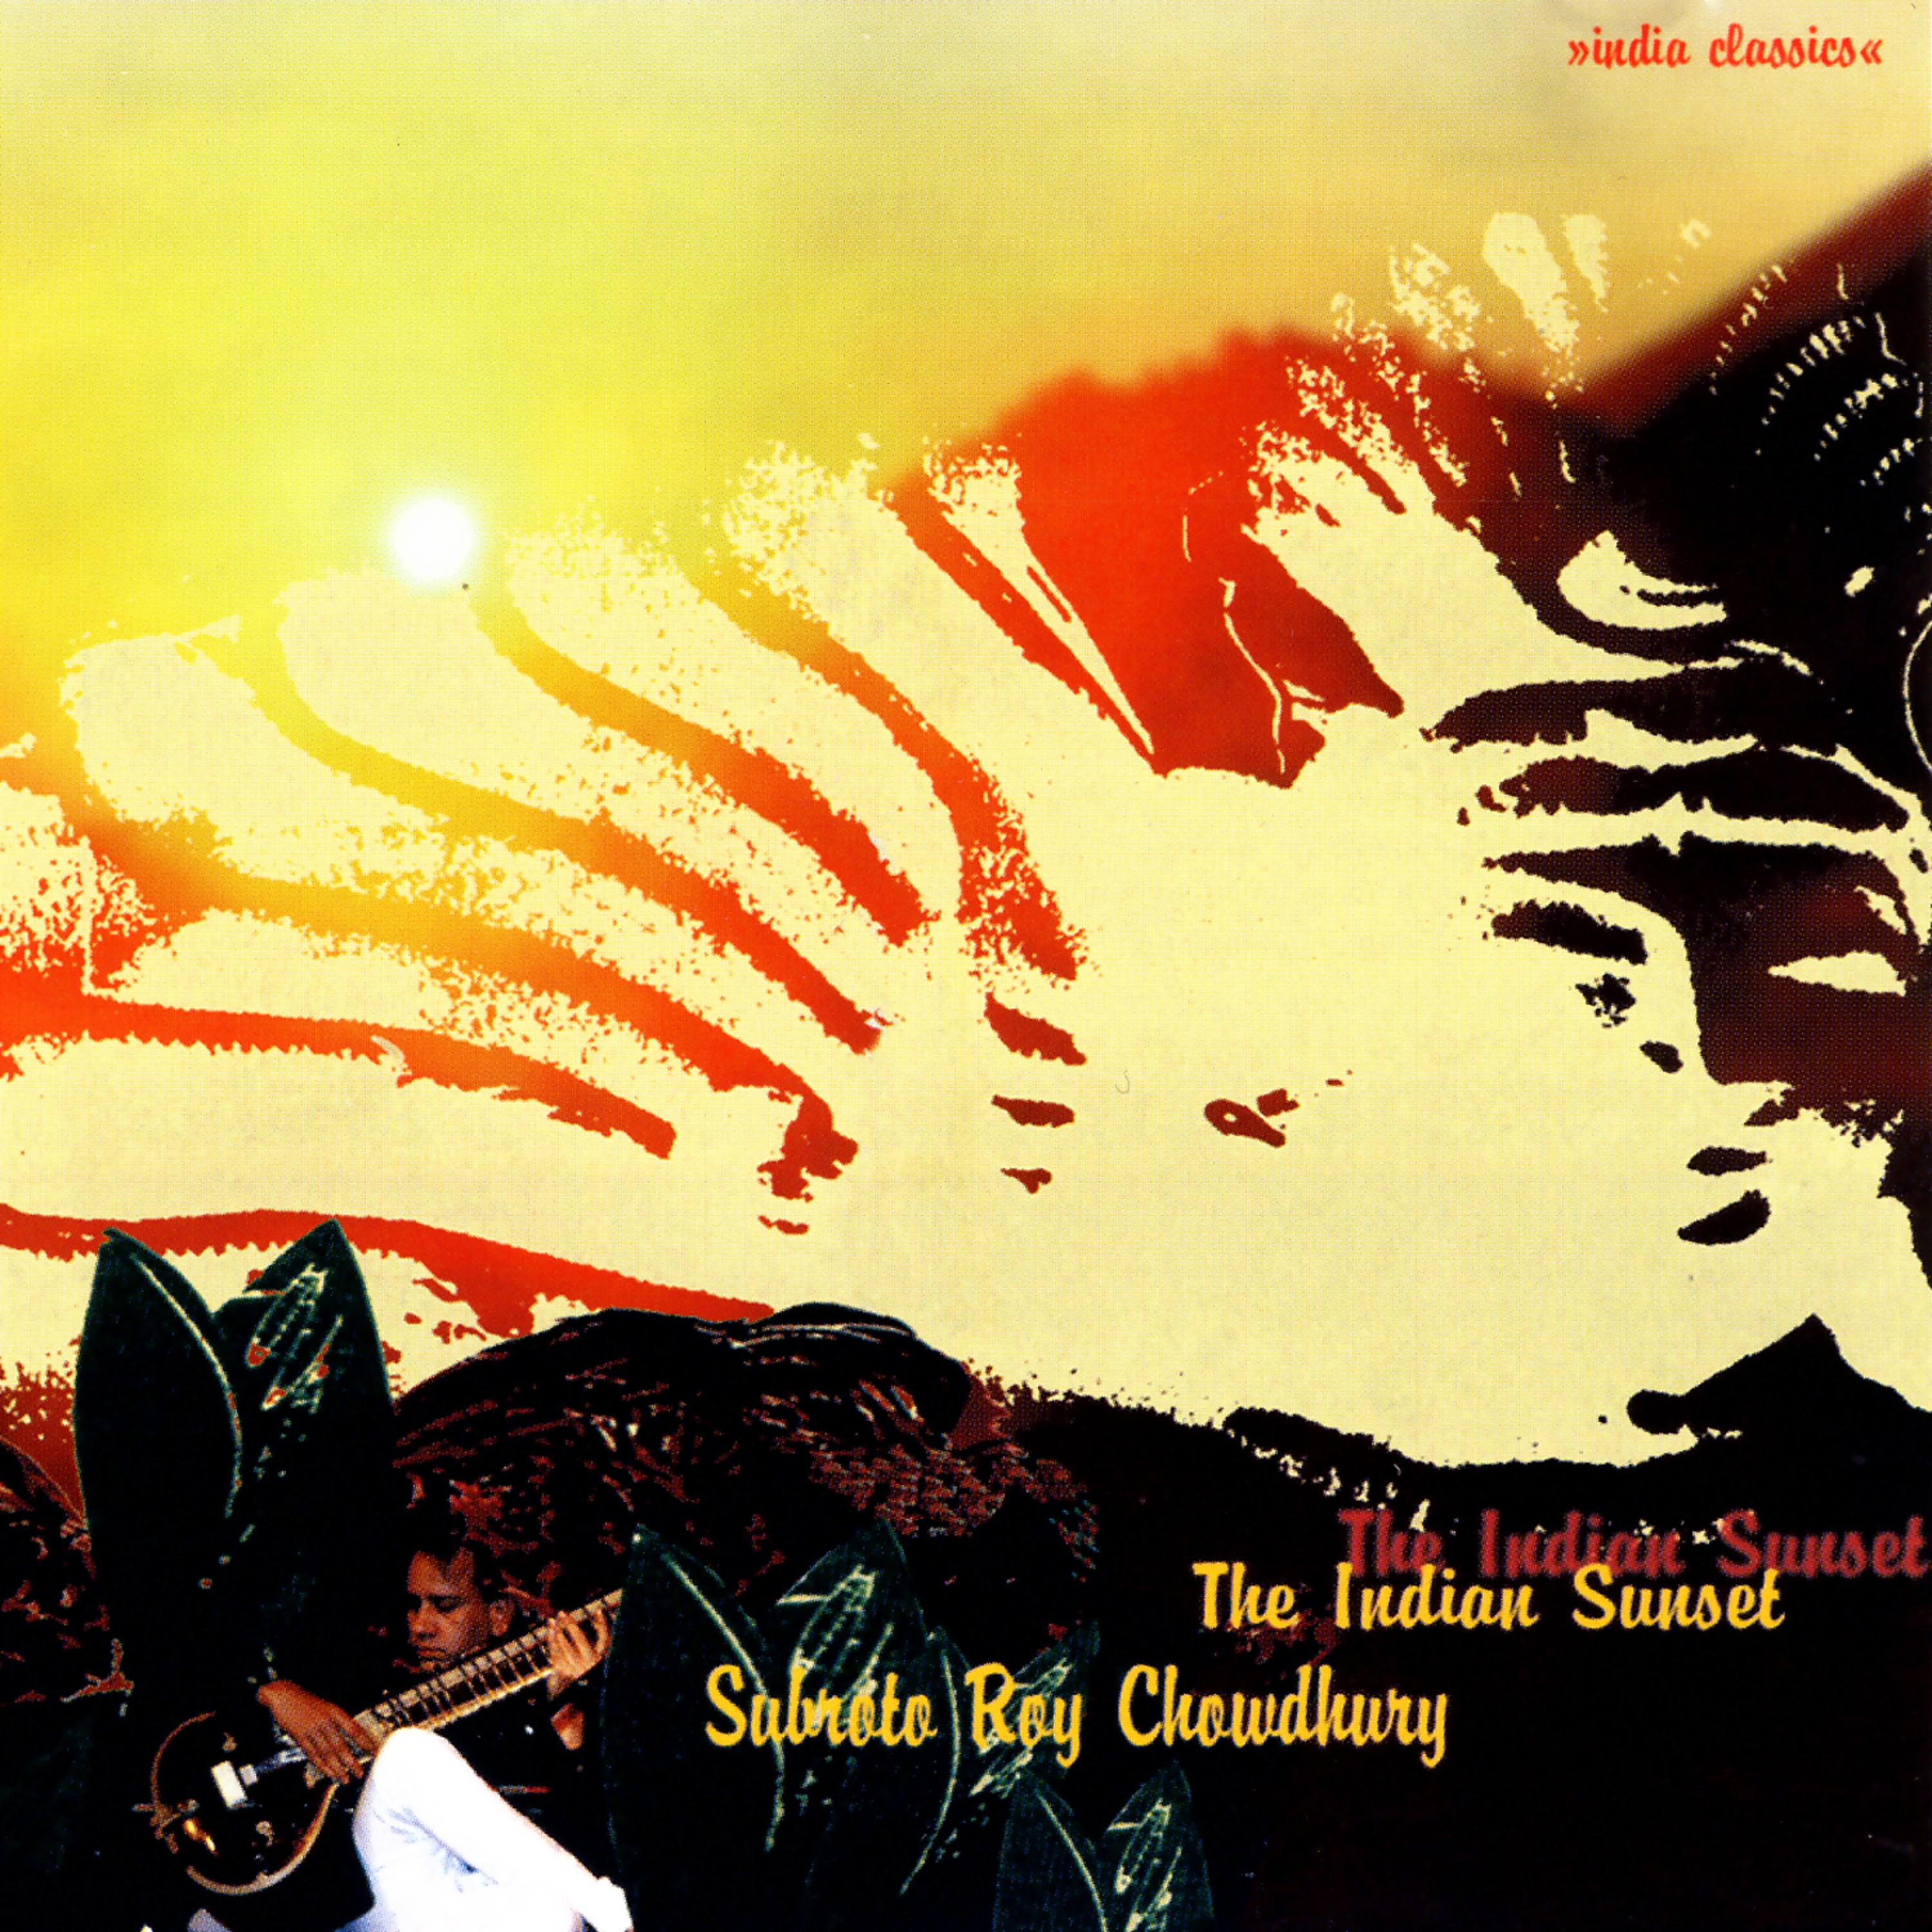 Постер альбома The Indian Sunset - "India Classics"